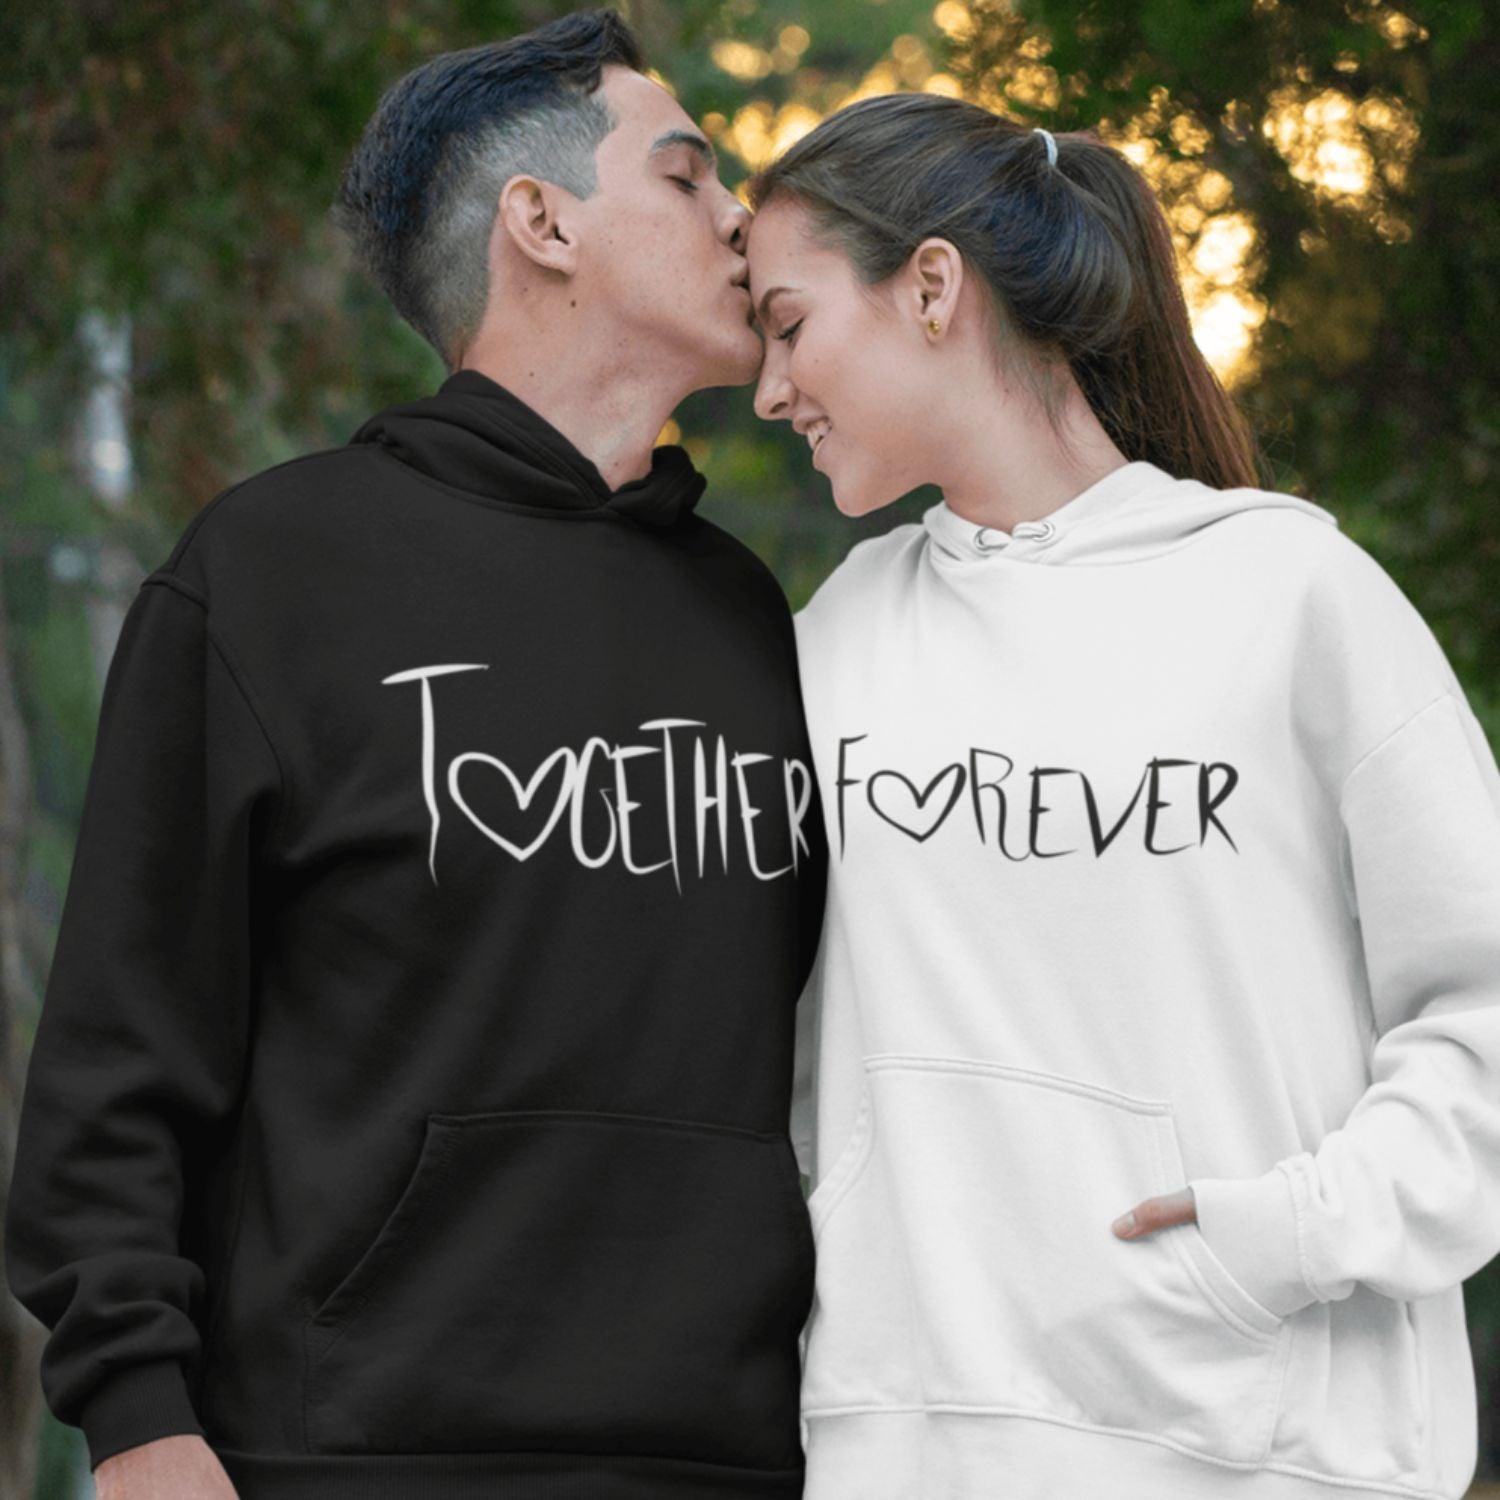 Matching Set: Together Forever Hoodies, Sweatshirts, Shirts